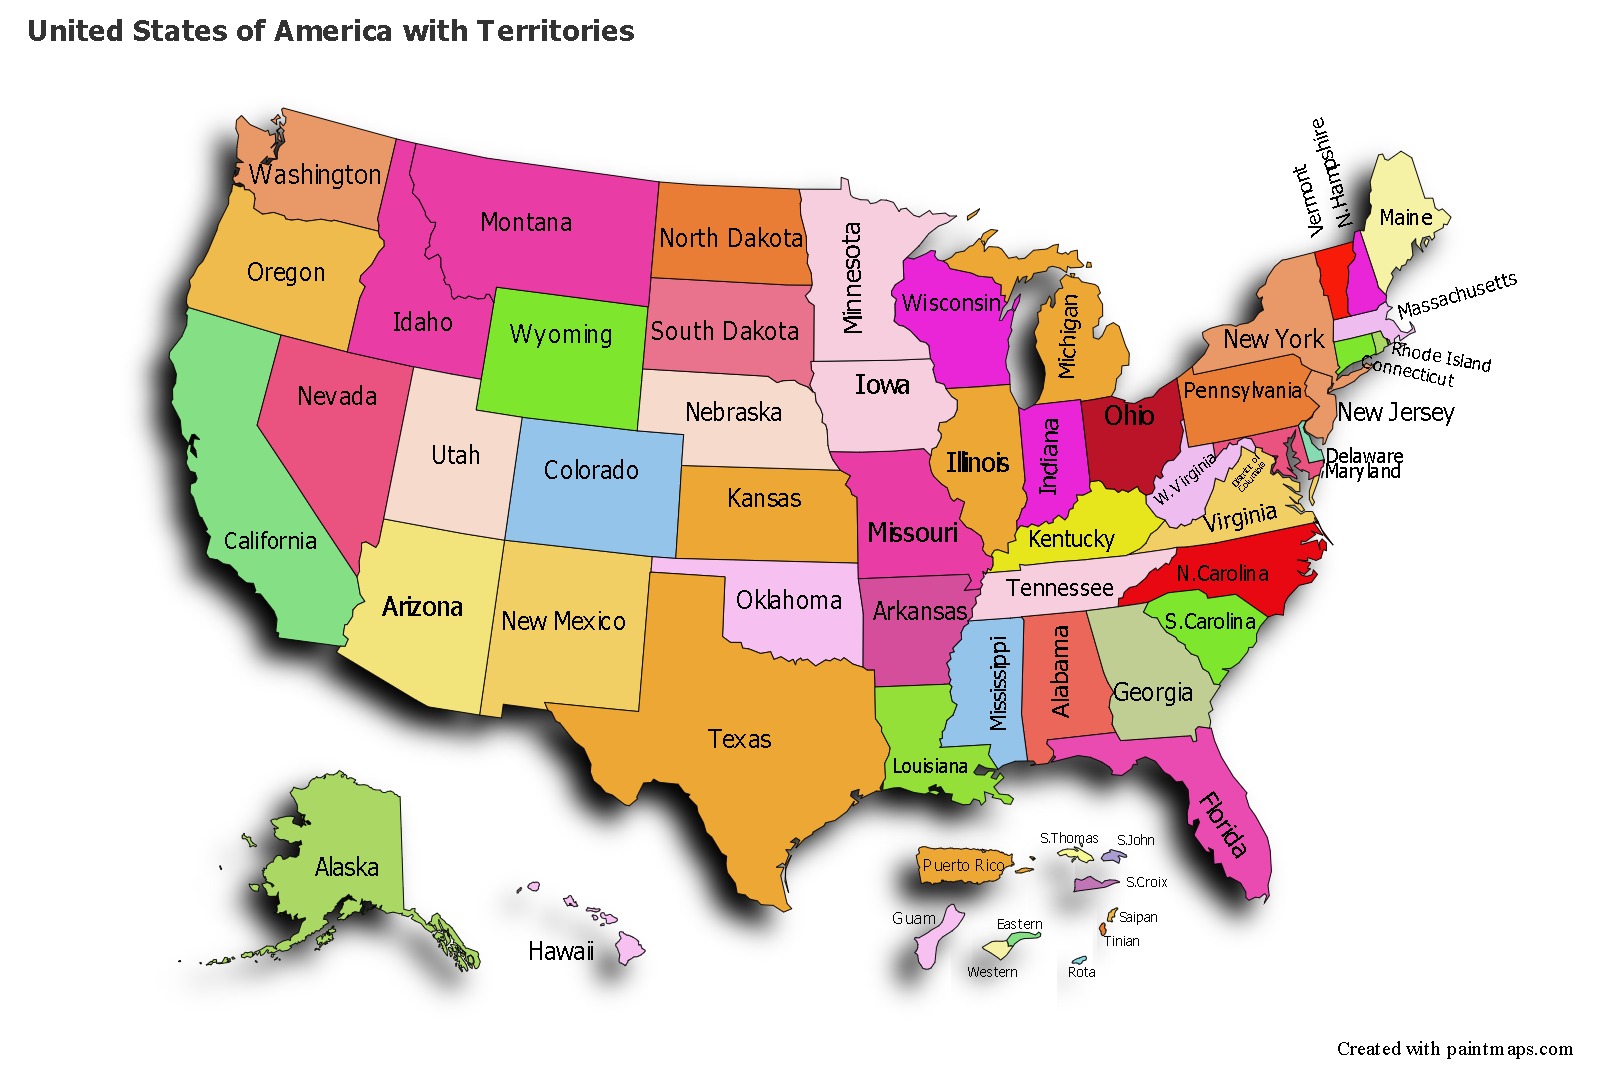 Nerd names in USA.